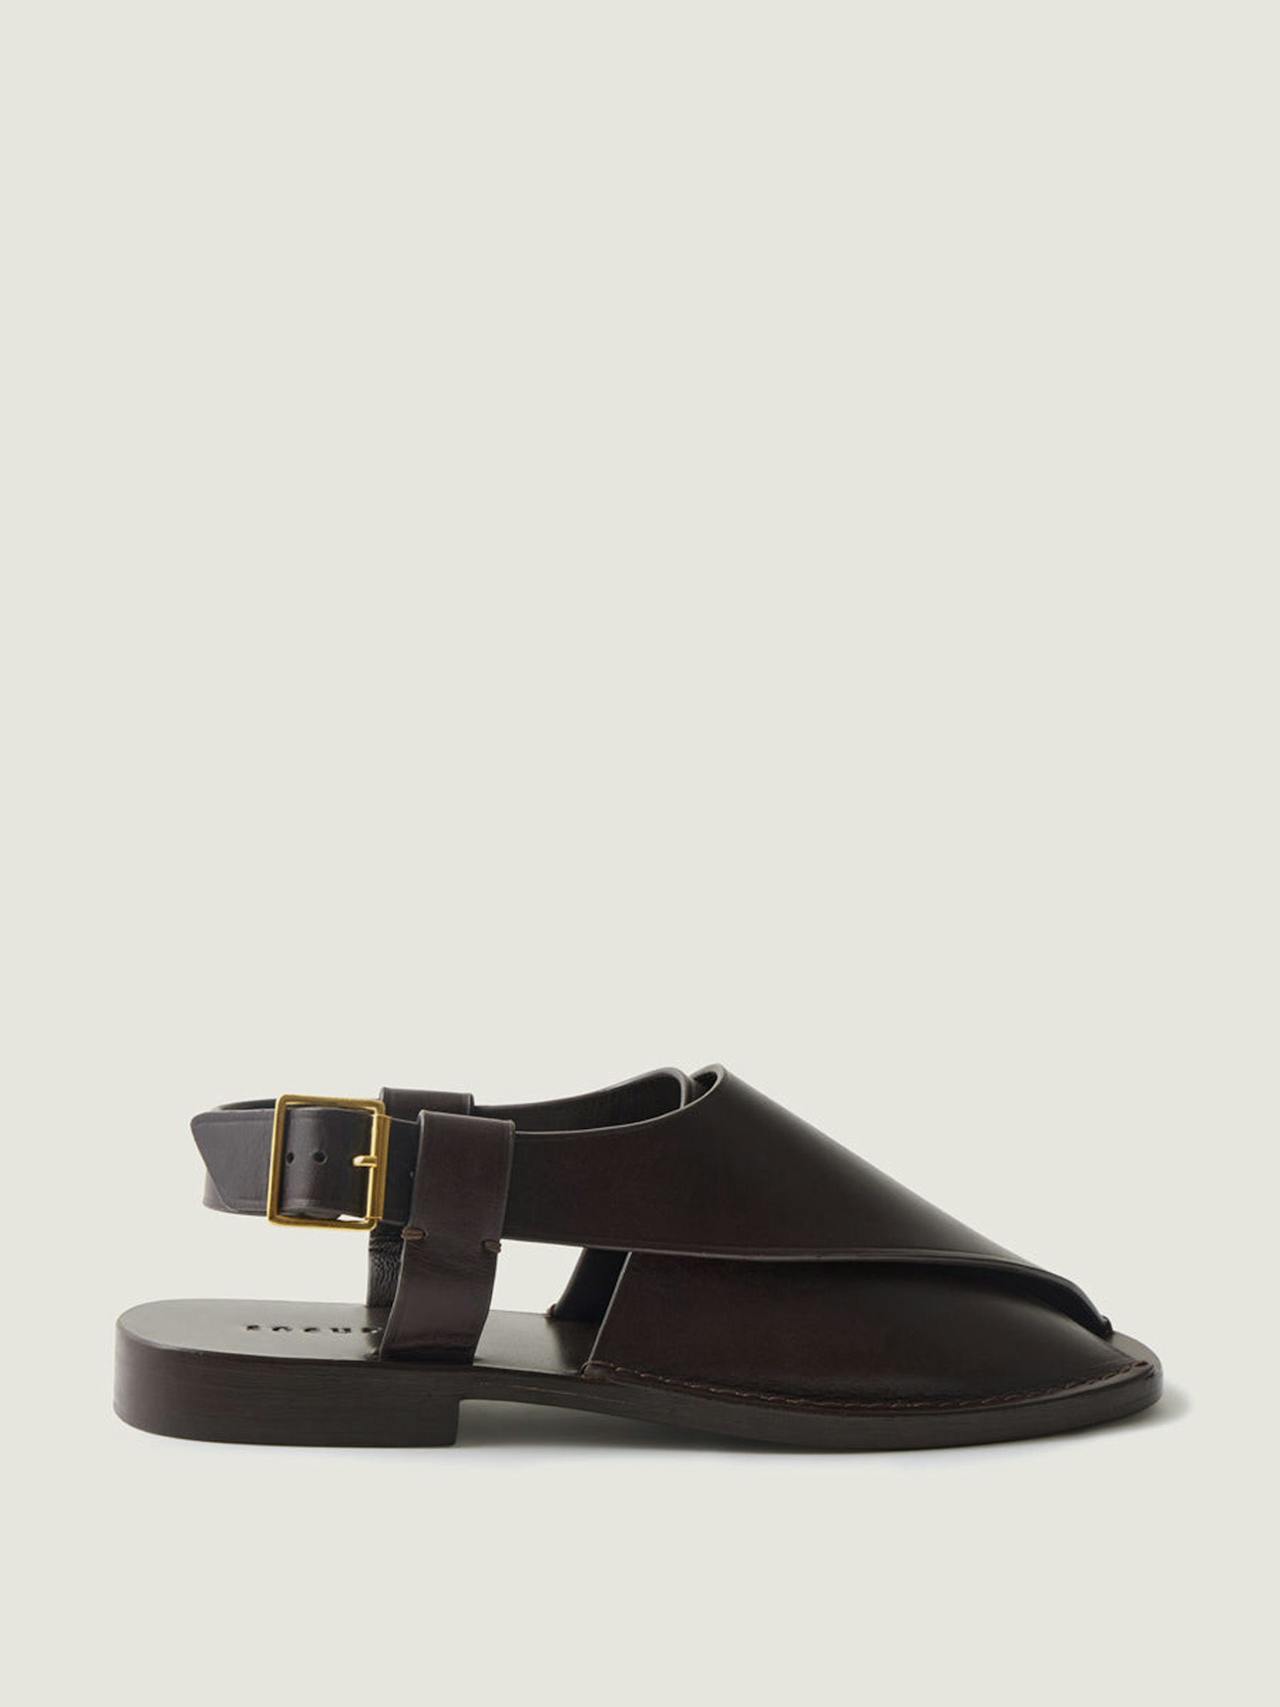 Andra flat enveloping dark brown leather sandals